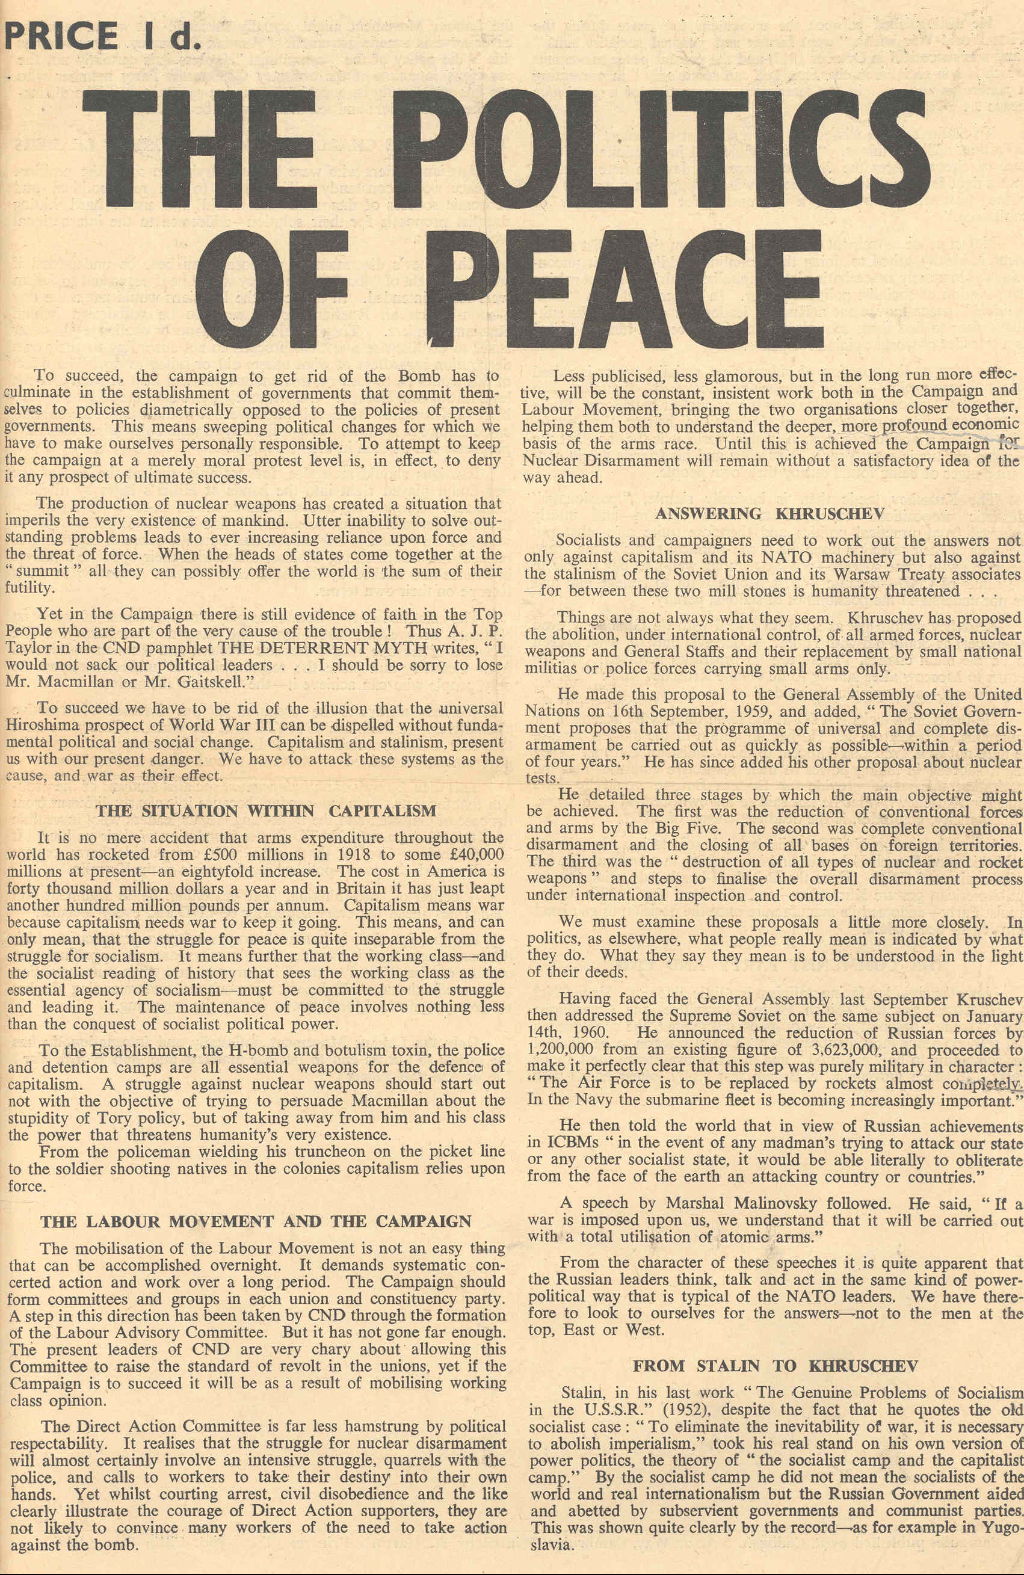 'The Politics of Peace', c1960